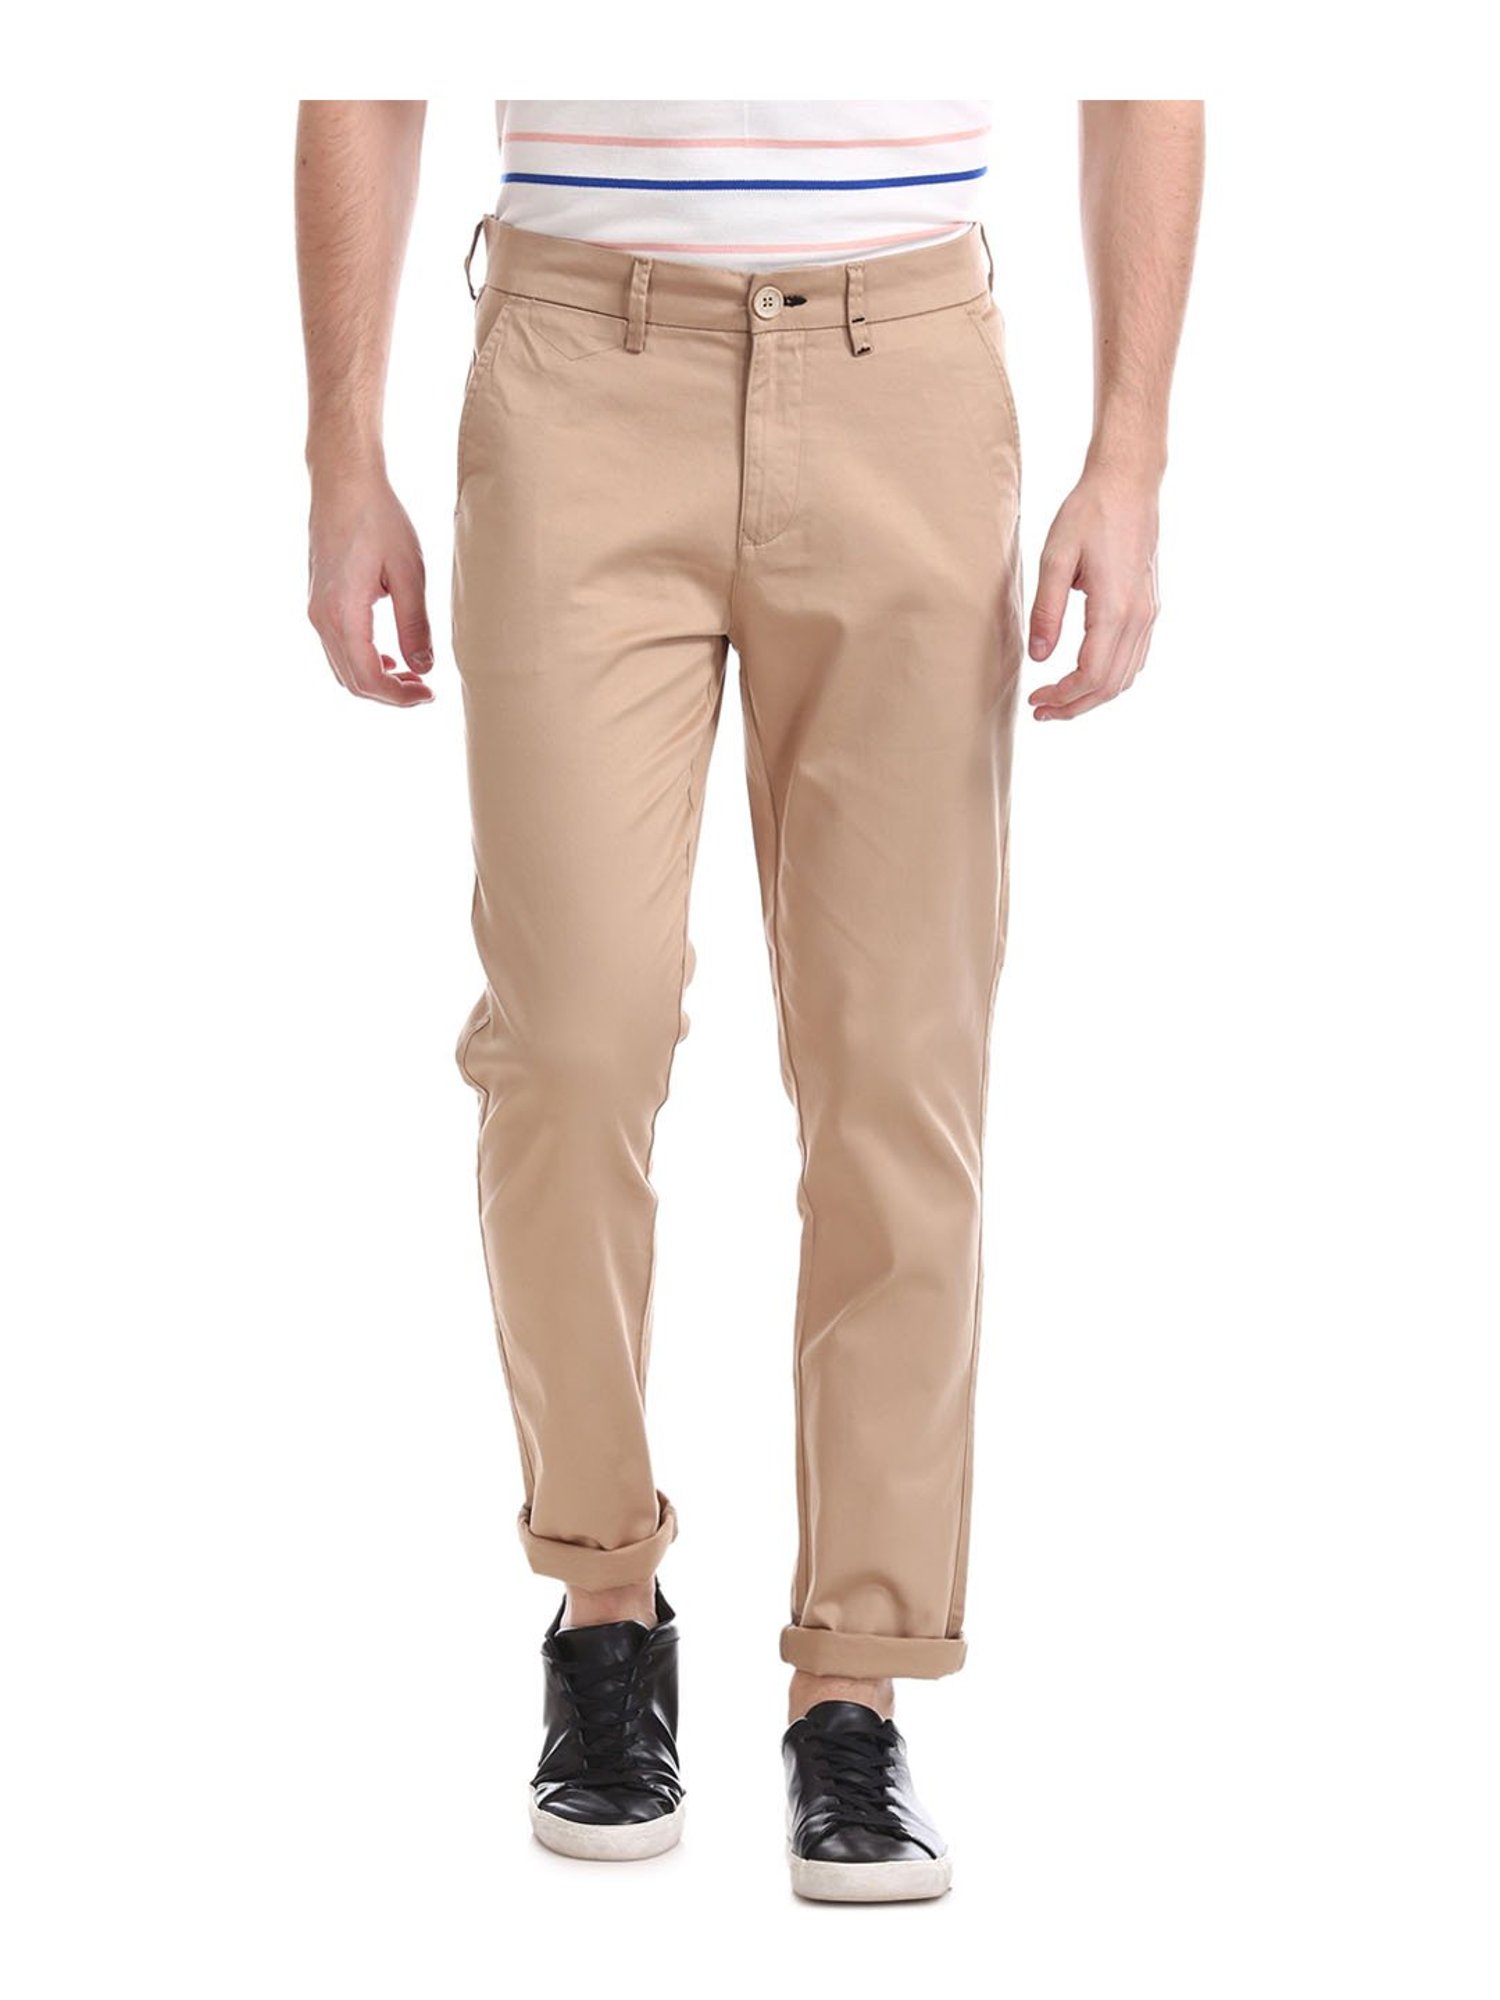 RUF & TUF Green Slim Fit Cotton Casual Trousers : Amazon.in: Fashion